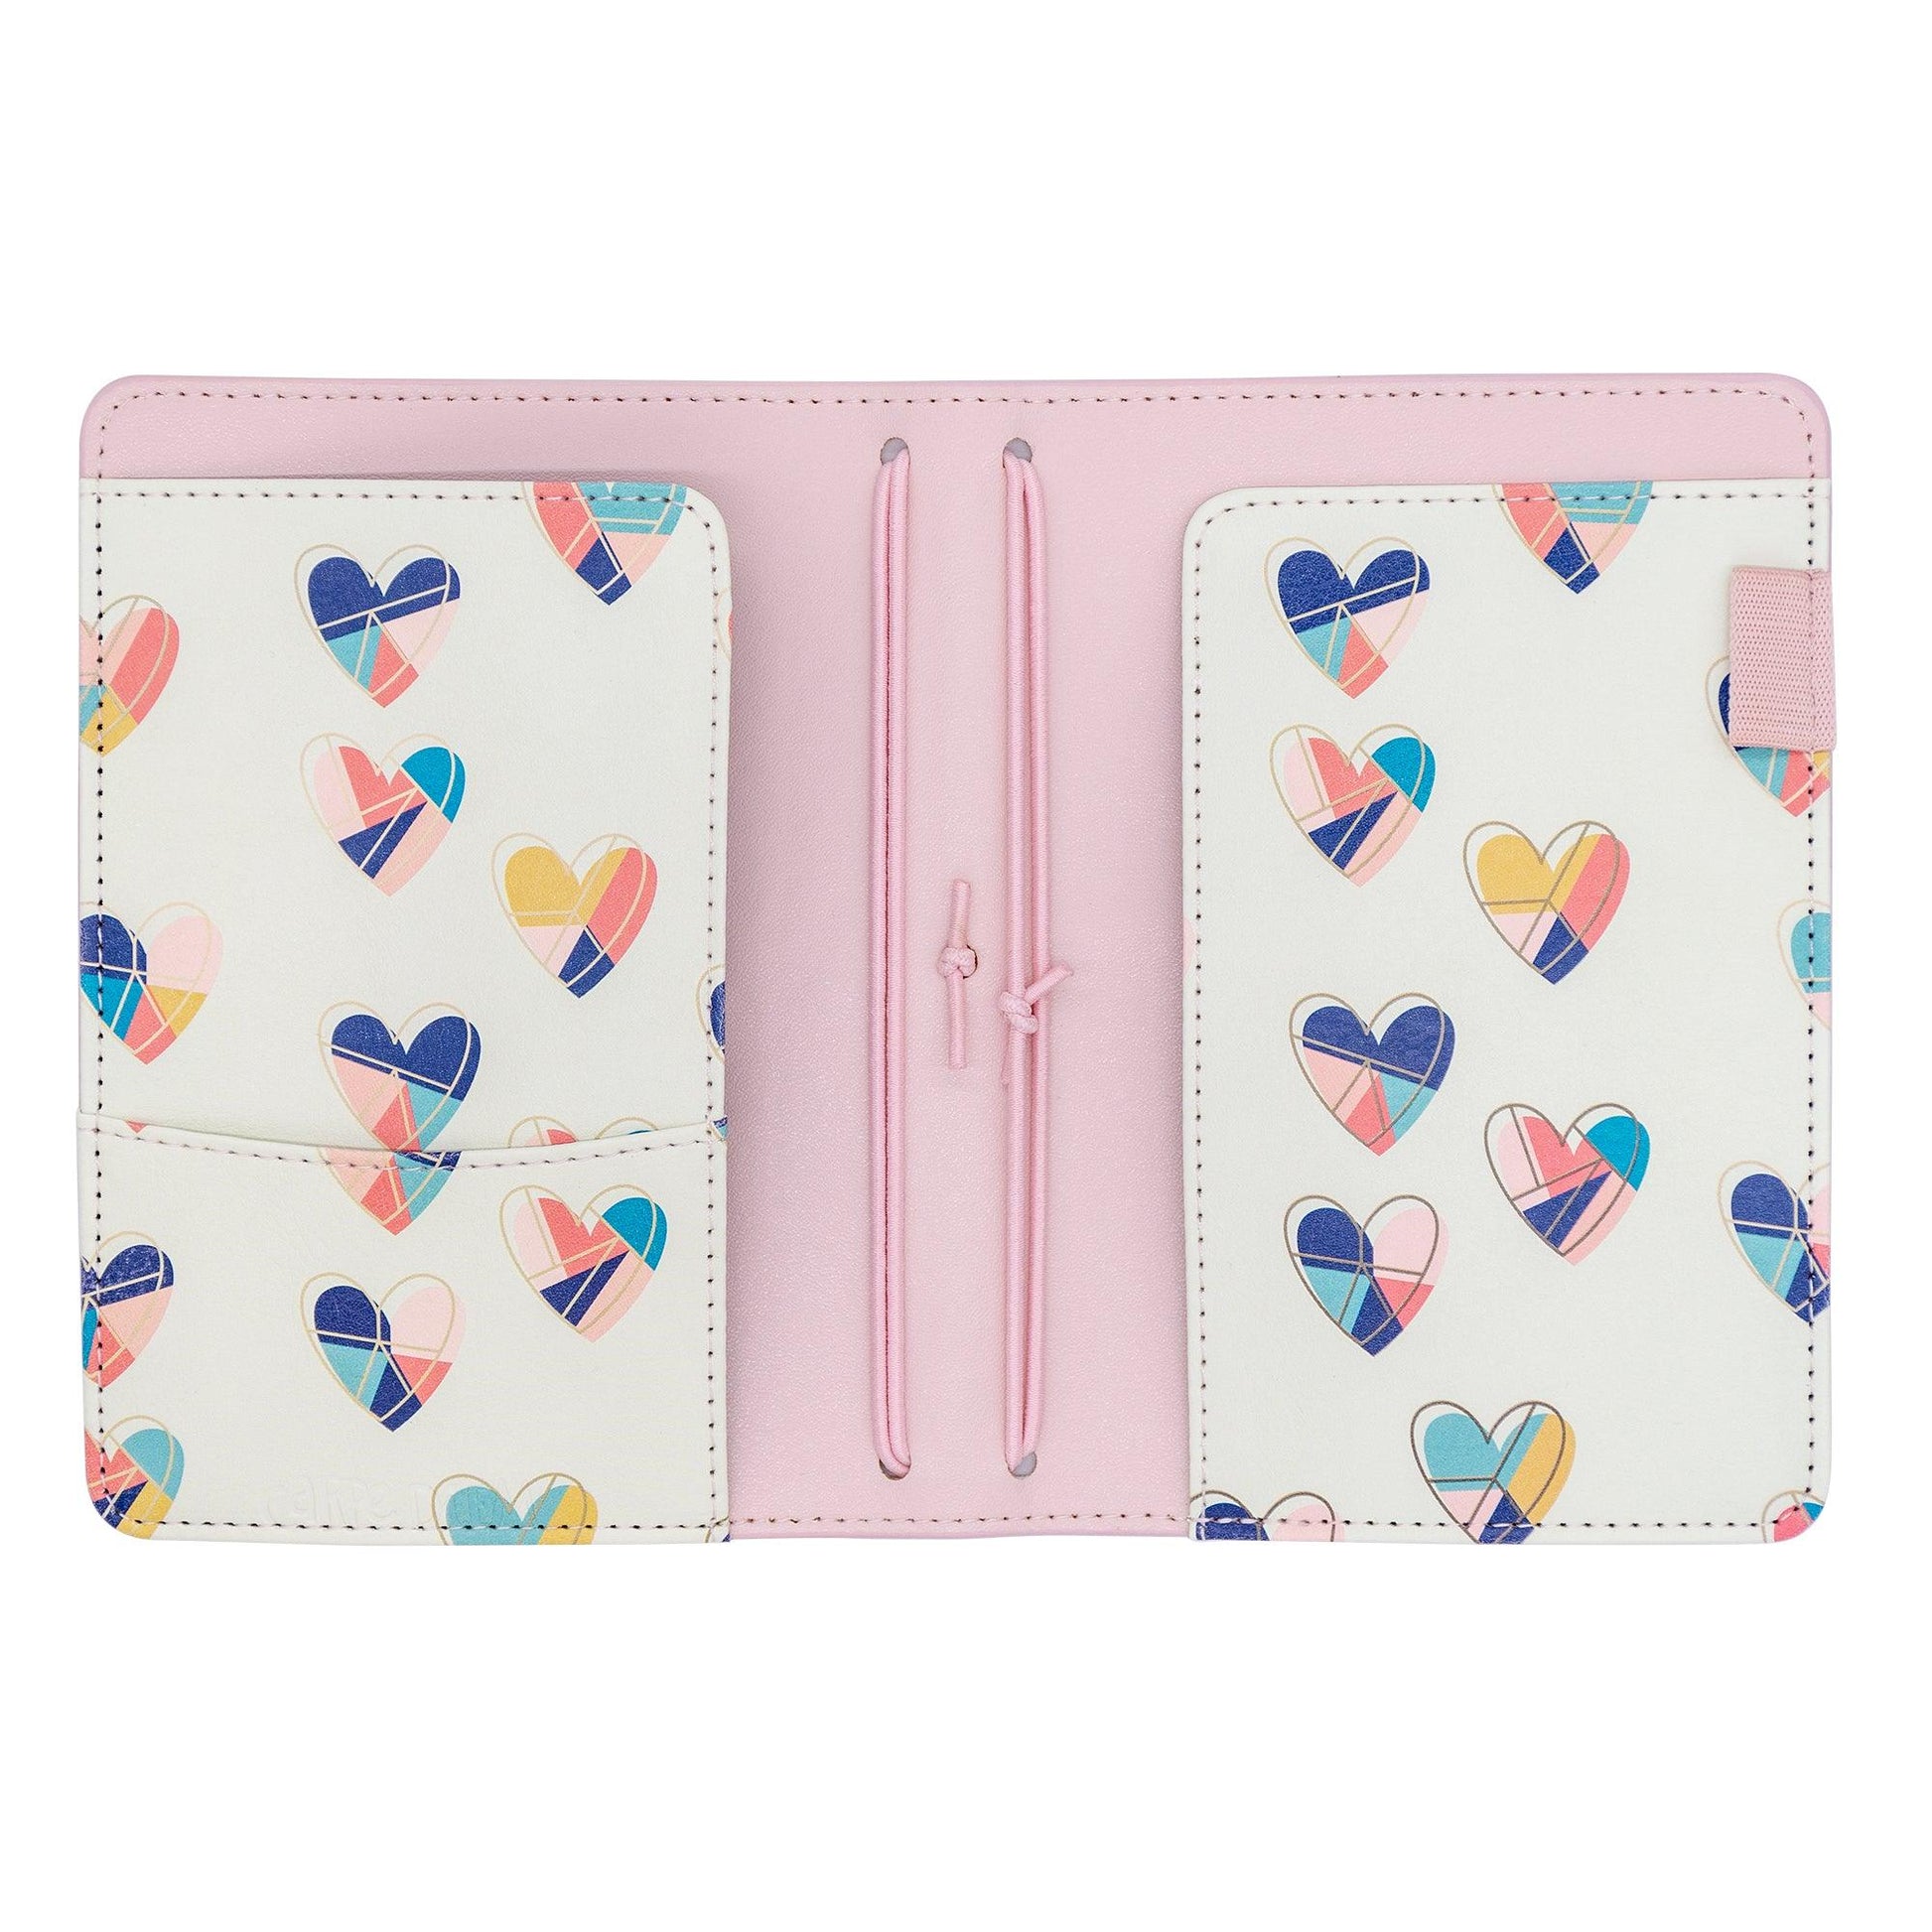 A6 Notebook and Passport Holder - Ballerina Pink - Loomini